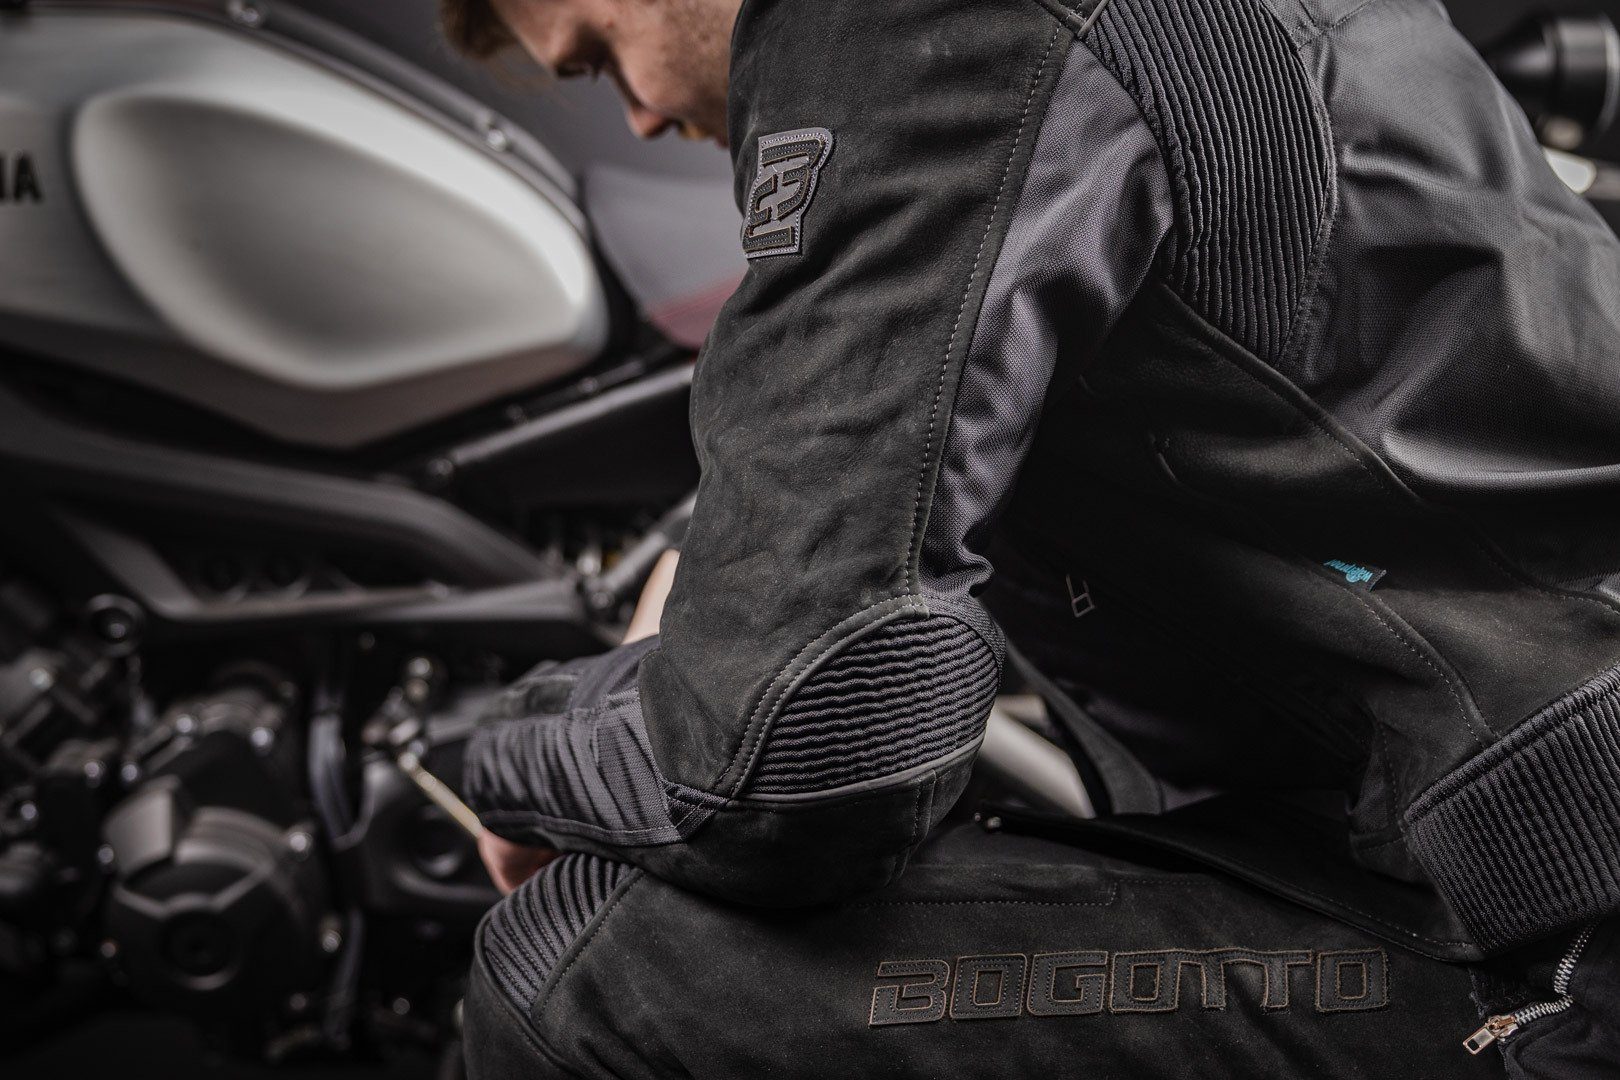 Bogotto Motorradhose Tek-M wasserdichte Motorrad Leder / Textilhose